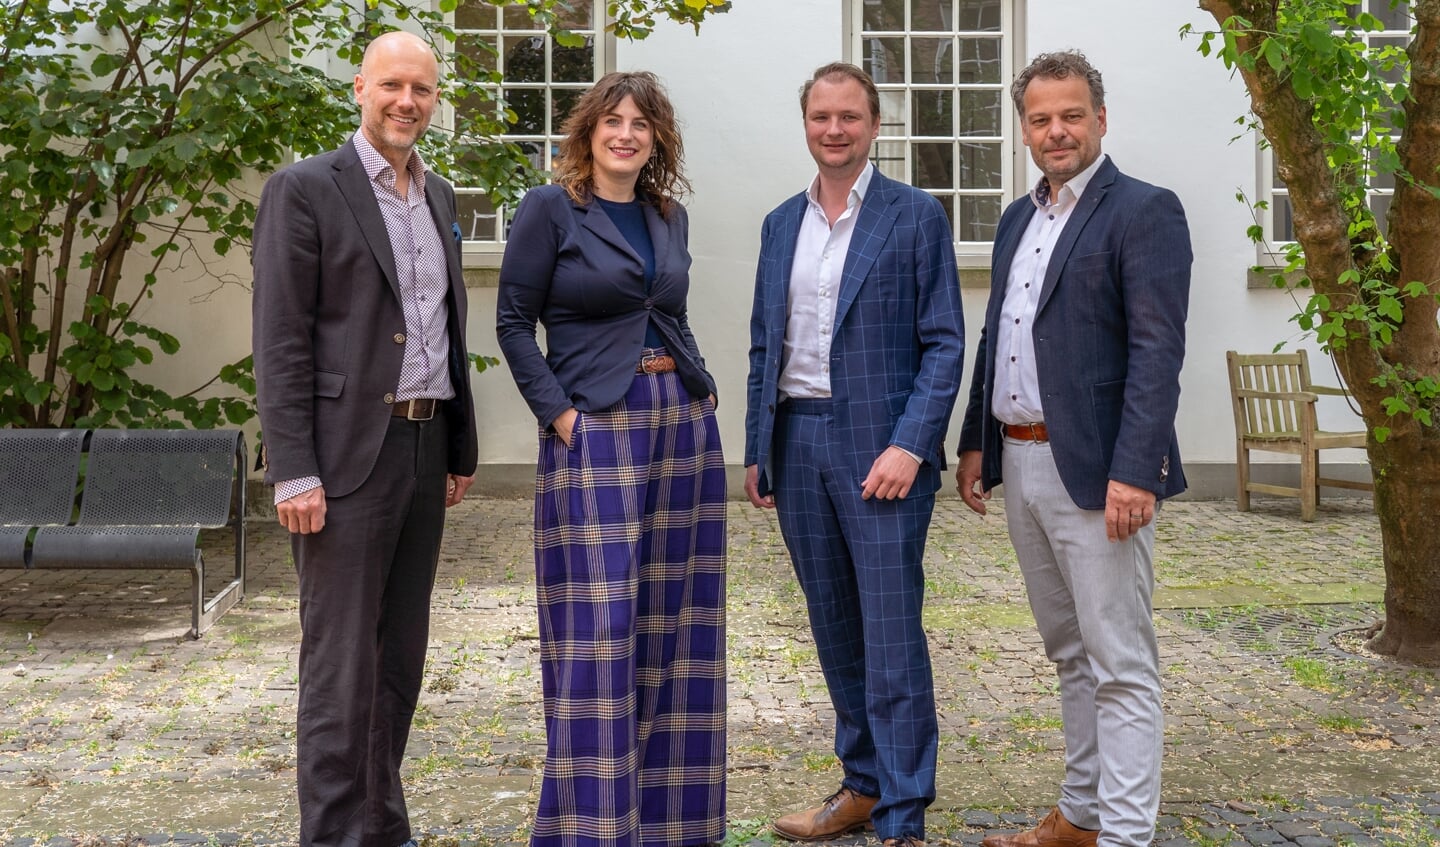 De kandidaat-wethouders, v.l.n.r.: Jasper Bloem (PvdA), Eva Boswinkel (GroenLinks), Sjoerd Wannet (D66) en Rick Verschure (Burgerbelang). Foto: PR